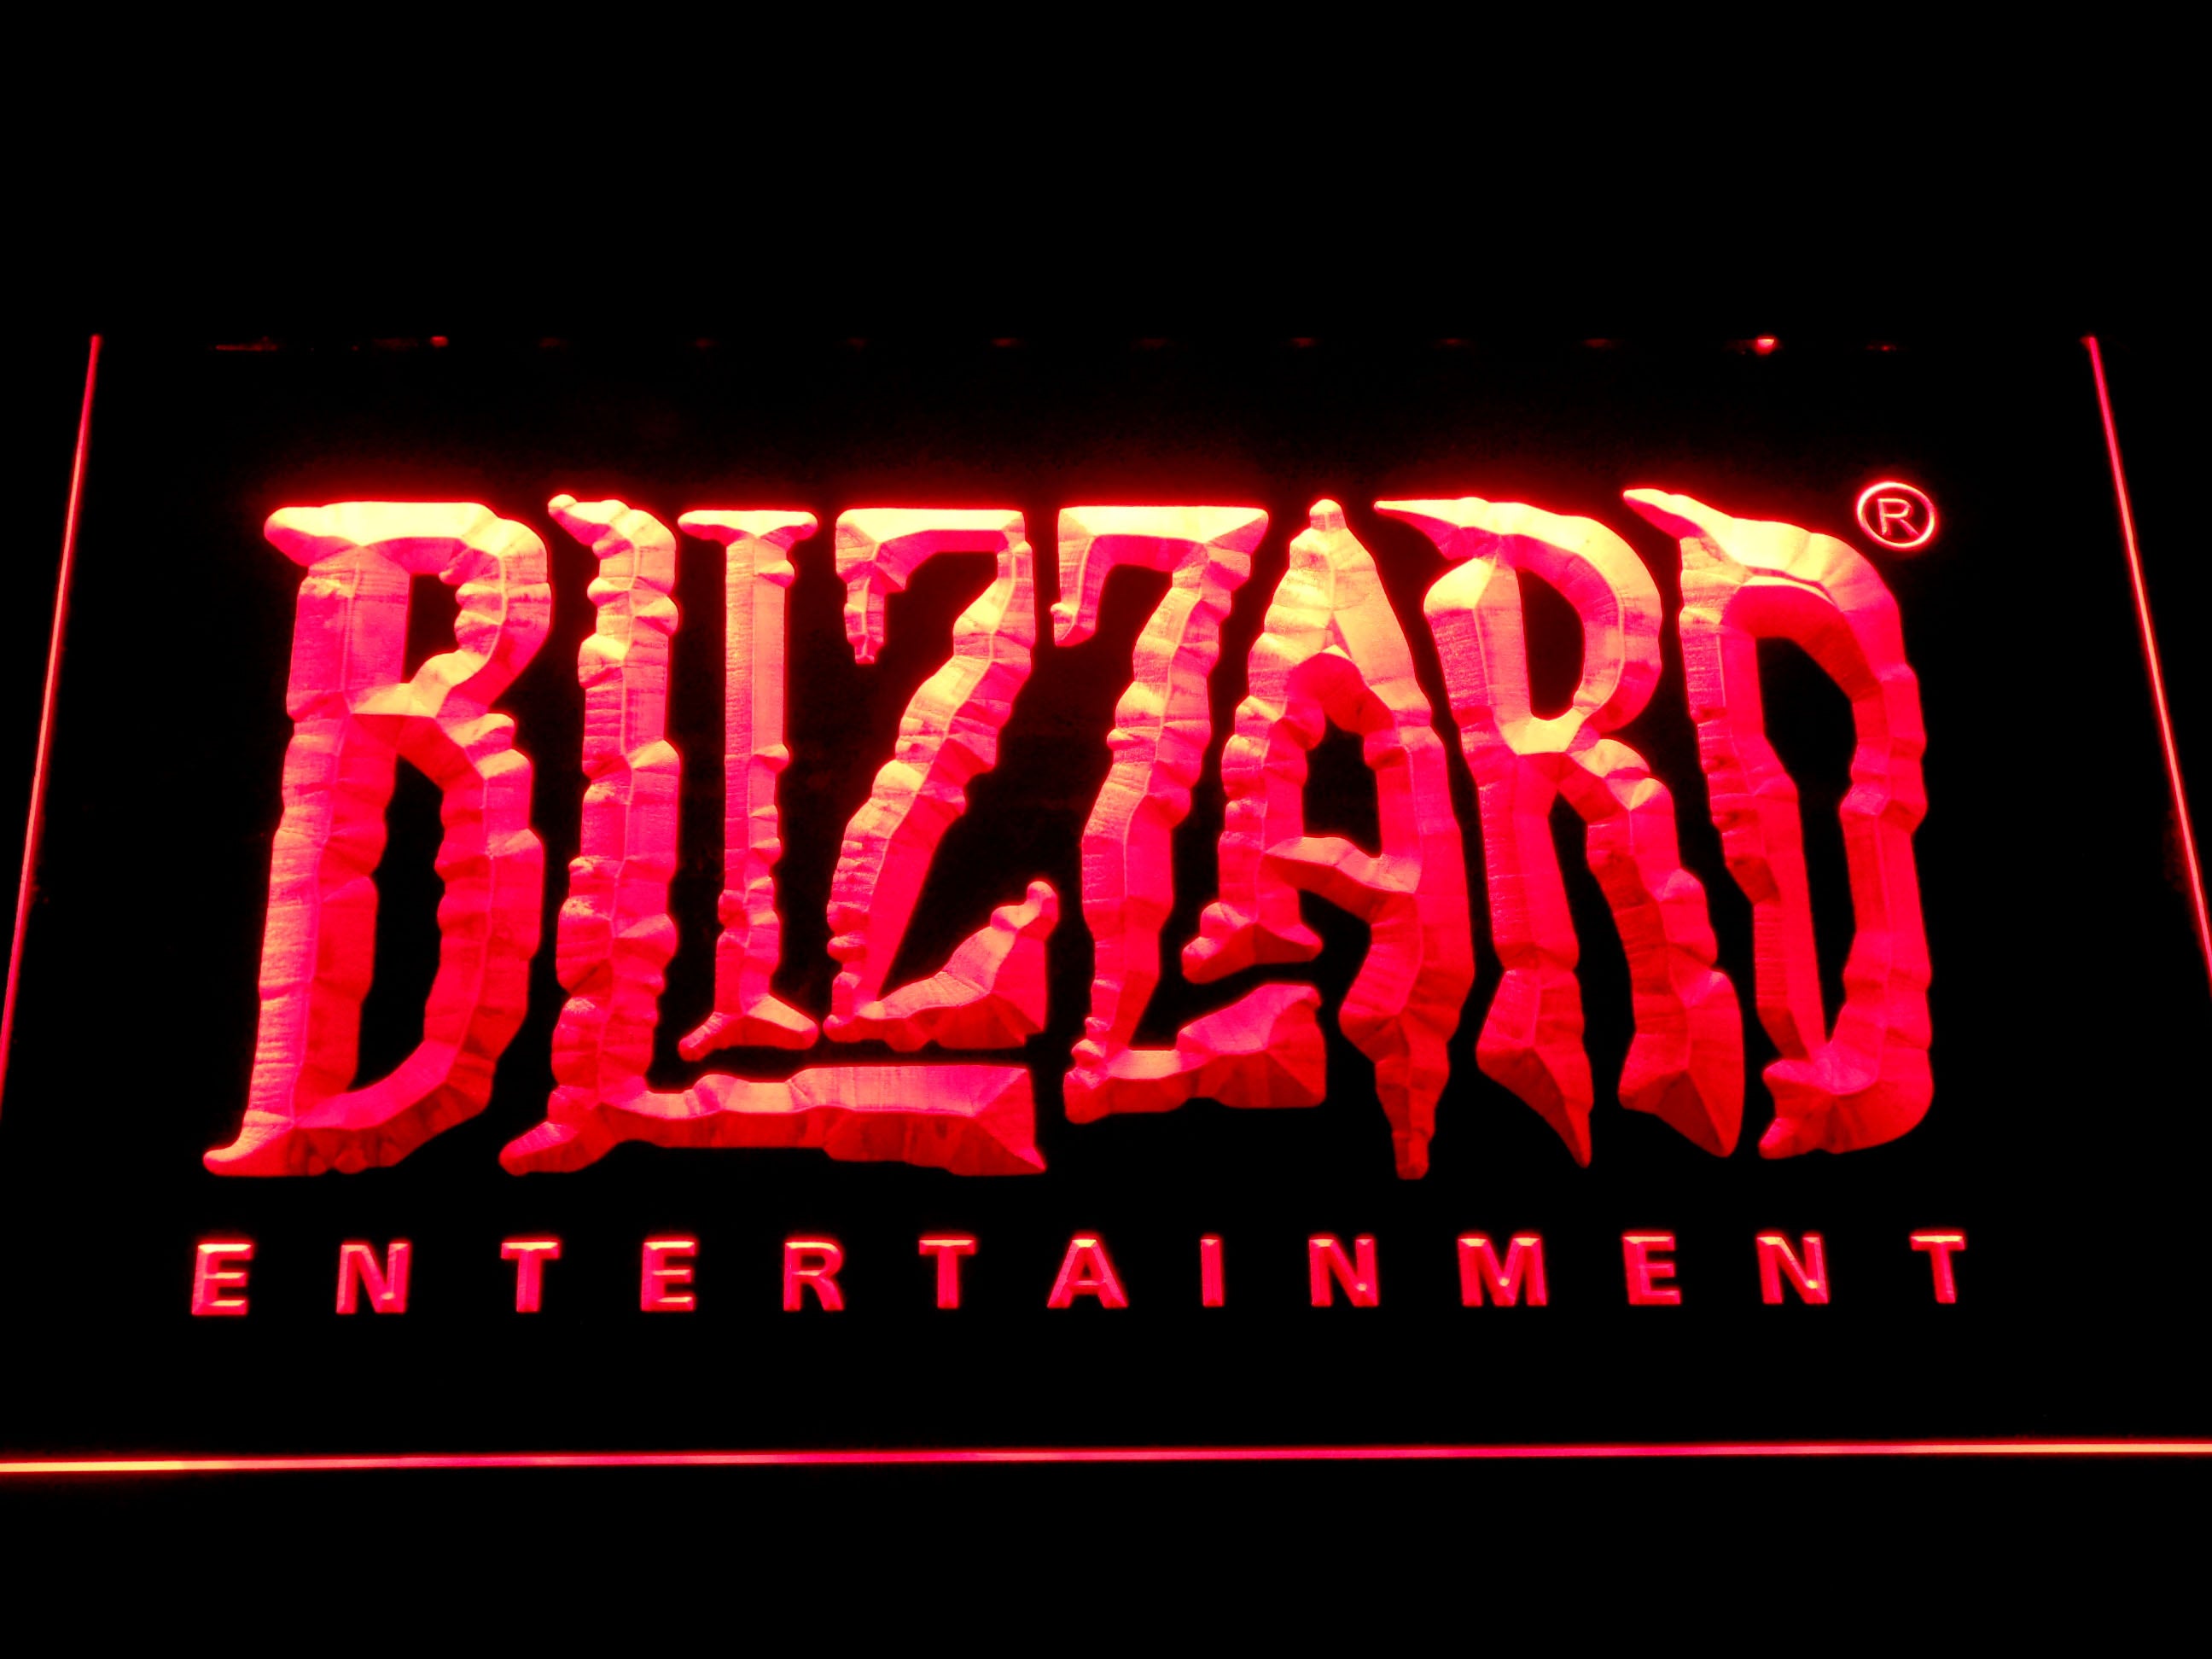 Blizzard Entertainment Neon Light LED Sign